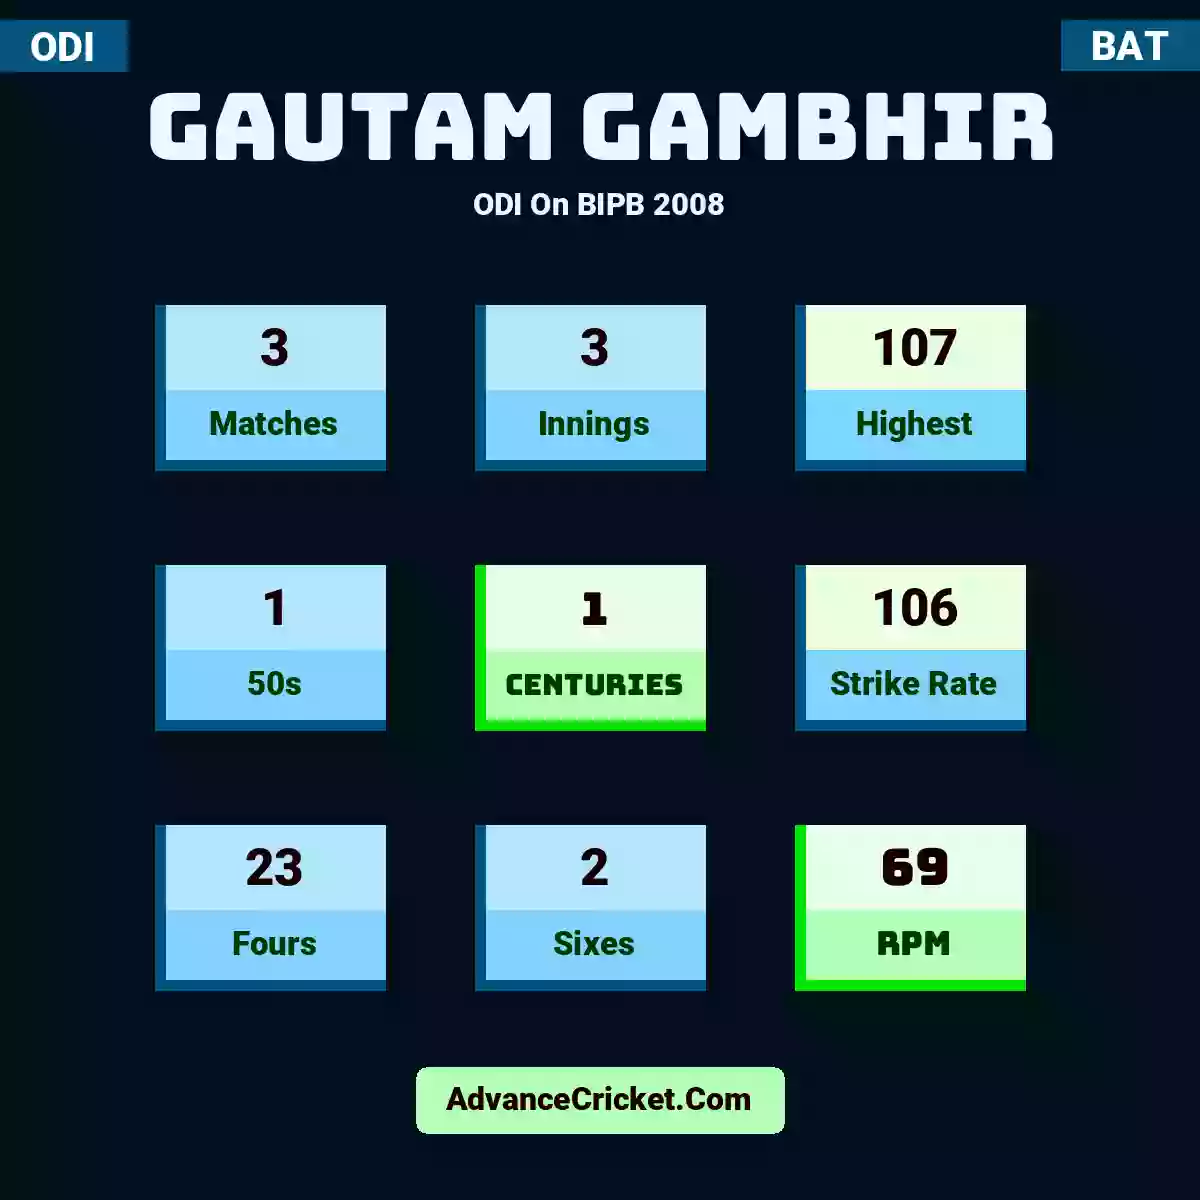 Gautam Gambhir ODI  On BIPB 2008, Gautam Gambhir played 3 matches, scored 107 runs as highest, 1 half-centuries, and 1 centuries, with a strike rate of 106. G.Gambhir hit 23 fours and 2 sixes, with an RPM of 69.